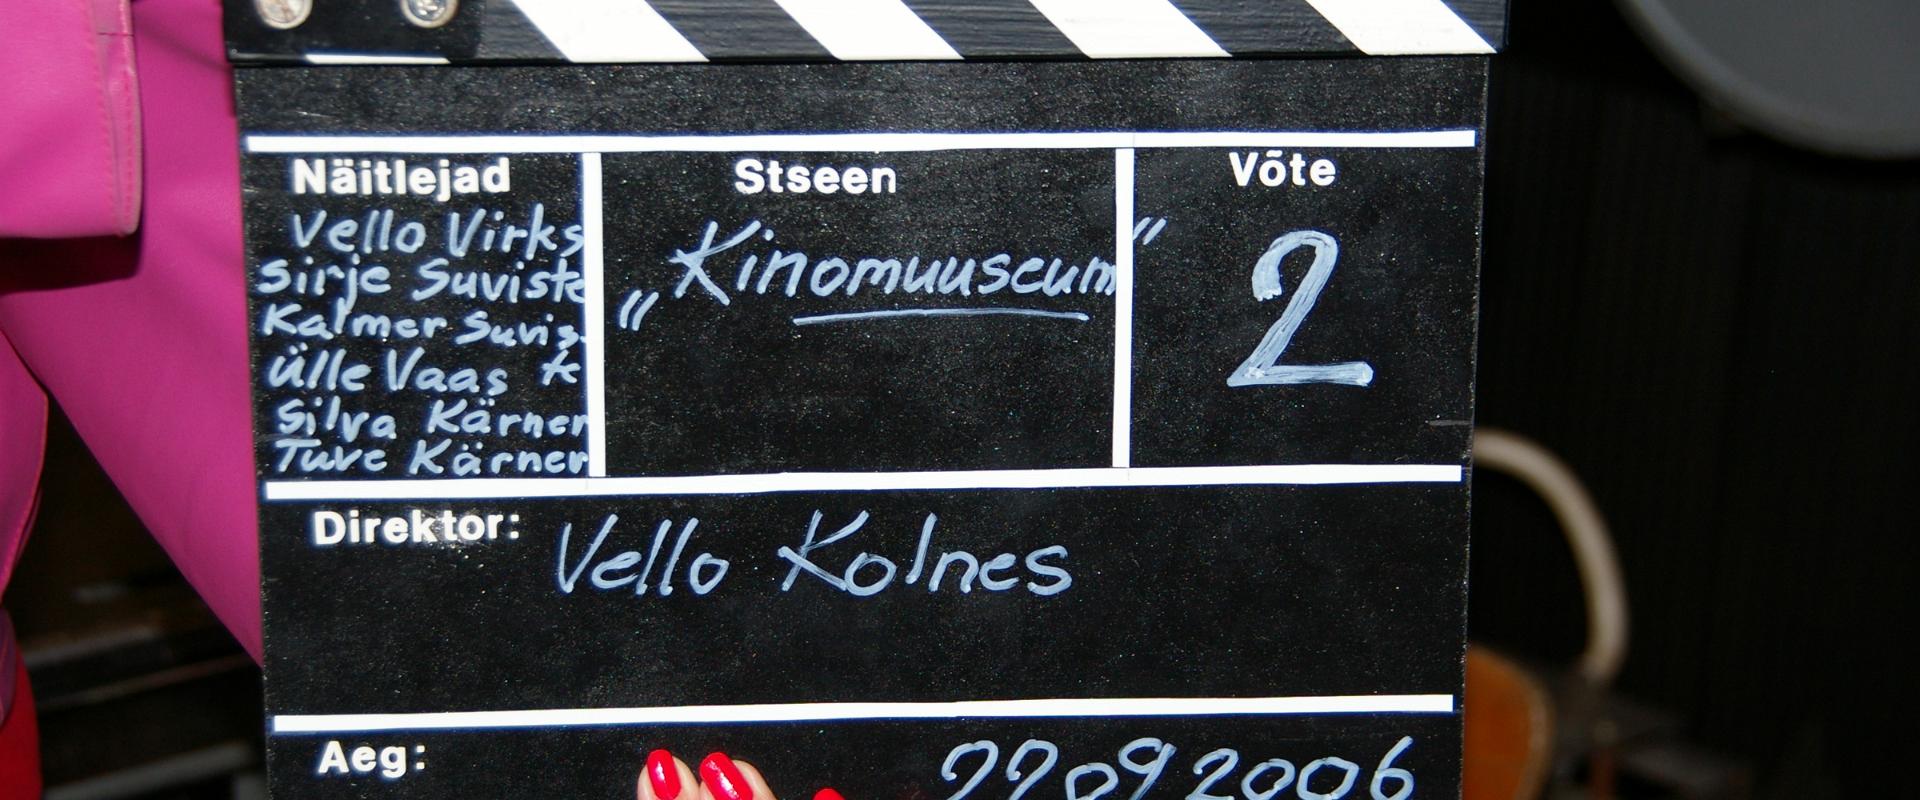 The Cinema Museum was opened in Järva-Jaani in 2006. The Cinema Museum shows the process of making a film, lighting equipment, cameras, a small film d